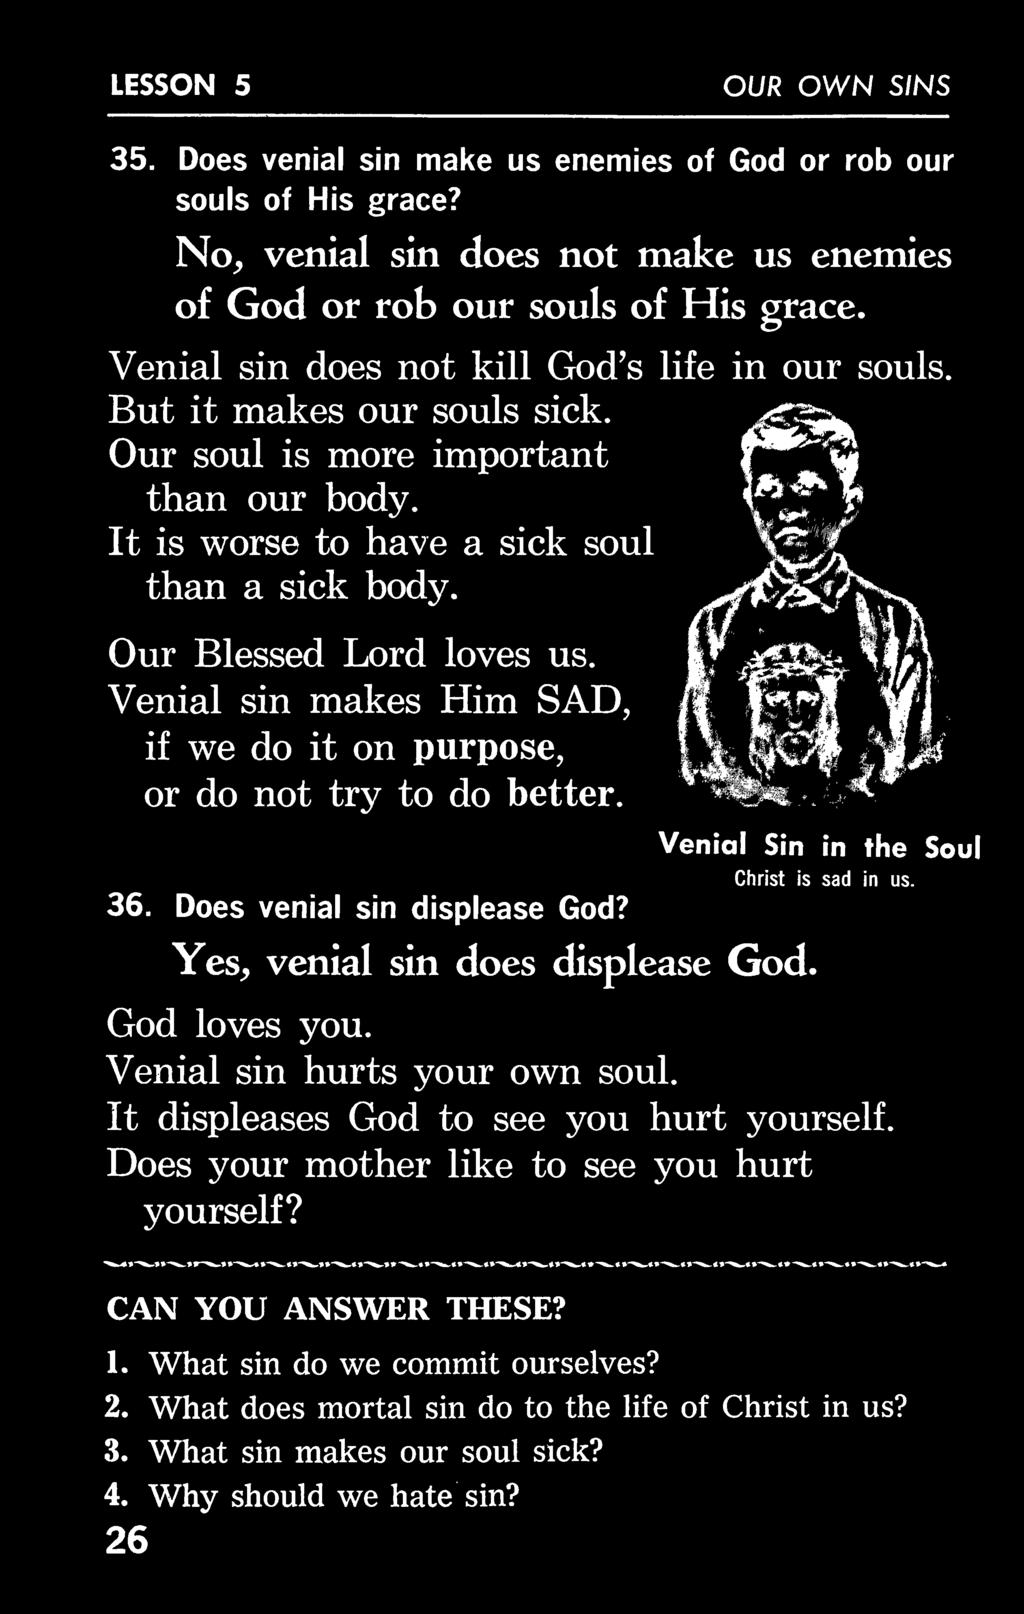 Yes, venial sin does displease God. God loves you. Venial sin hurts your own soul. Venial Sin in the Soul Christ is sad in us.